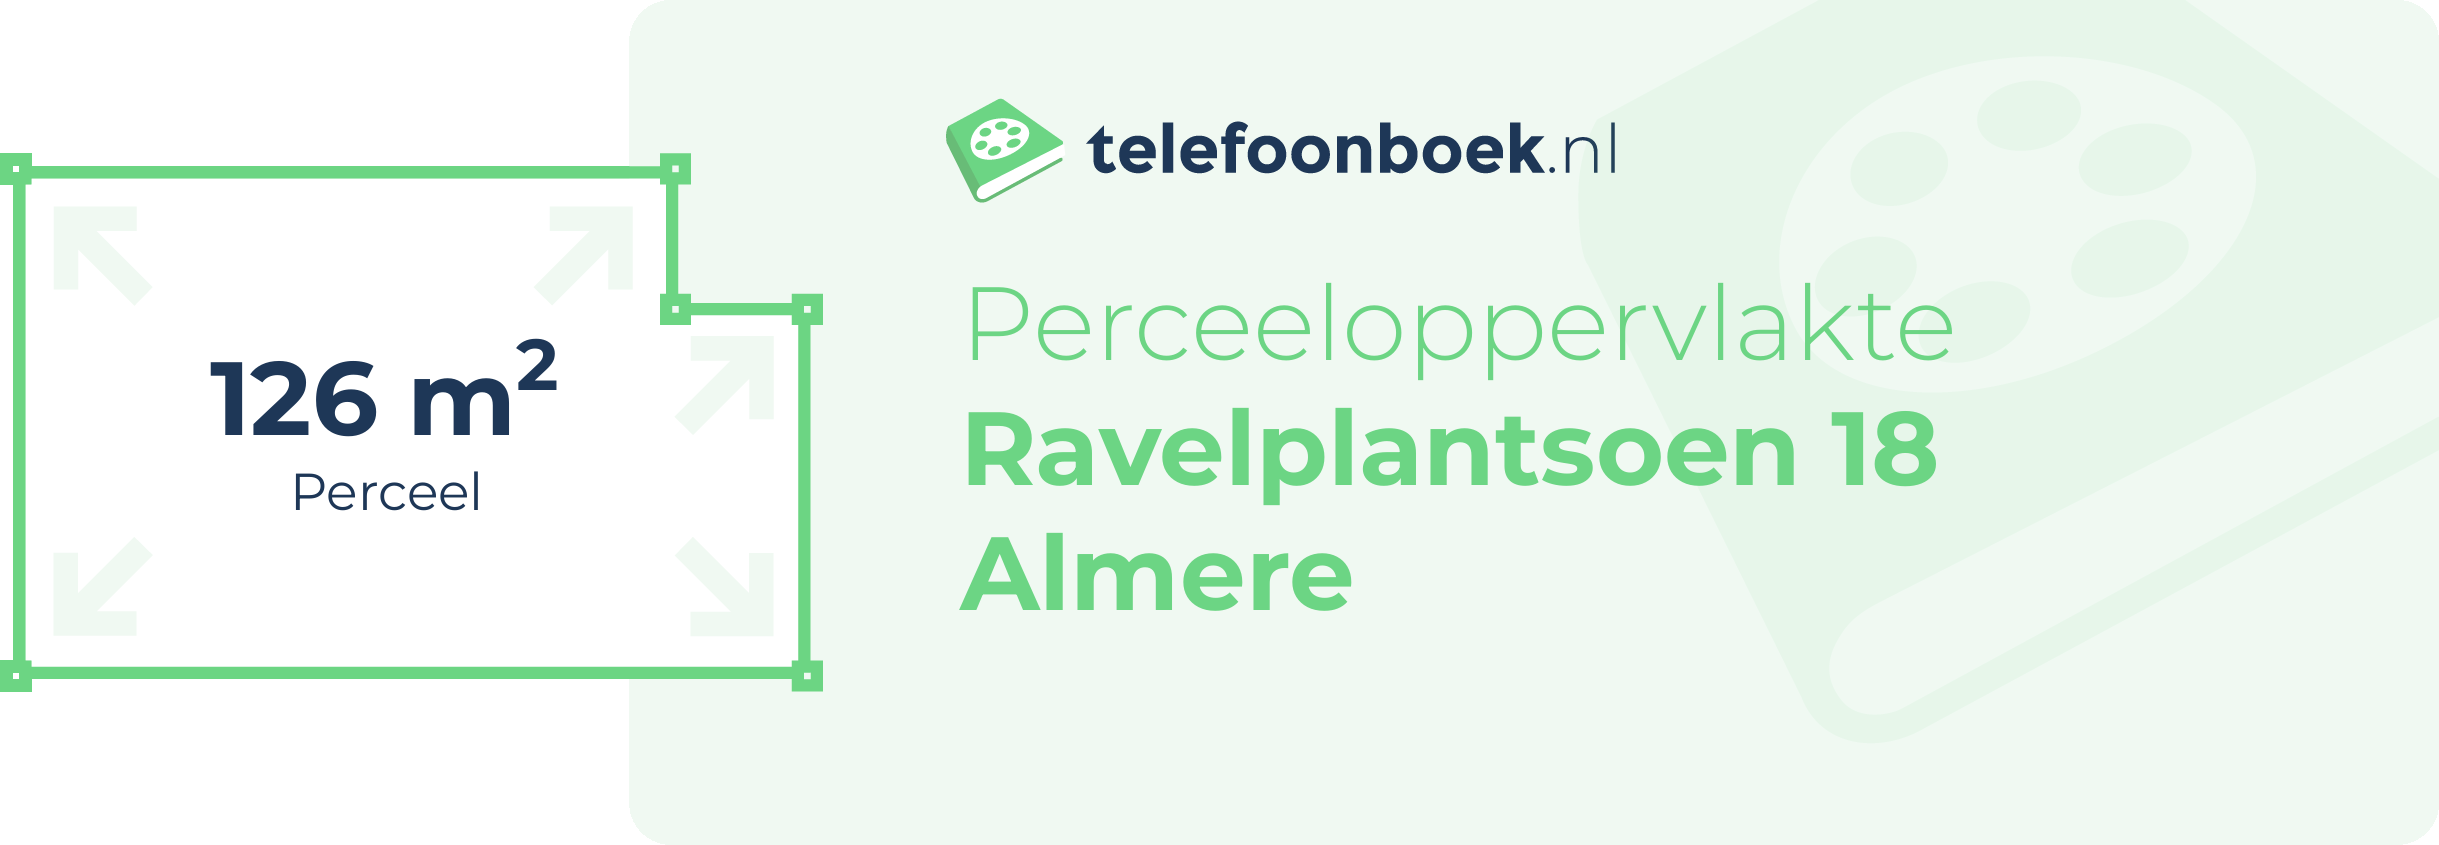 Perceeloppervlakte Ravelplantsoen 18 Almere